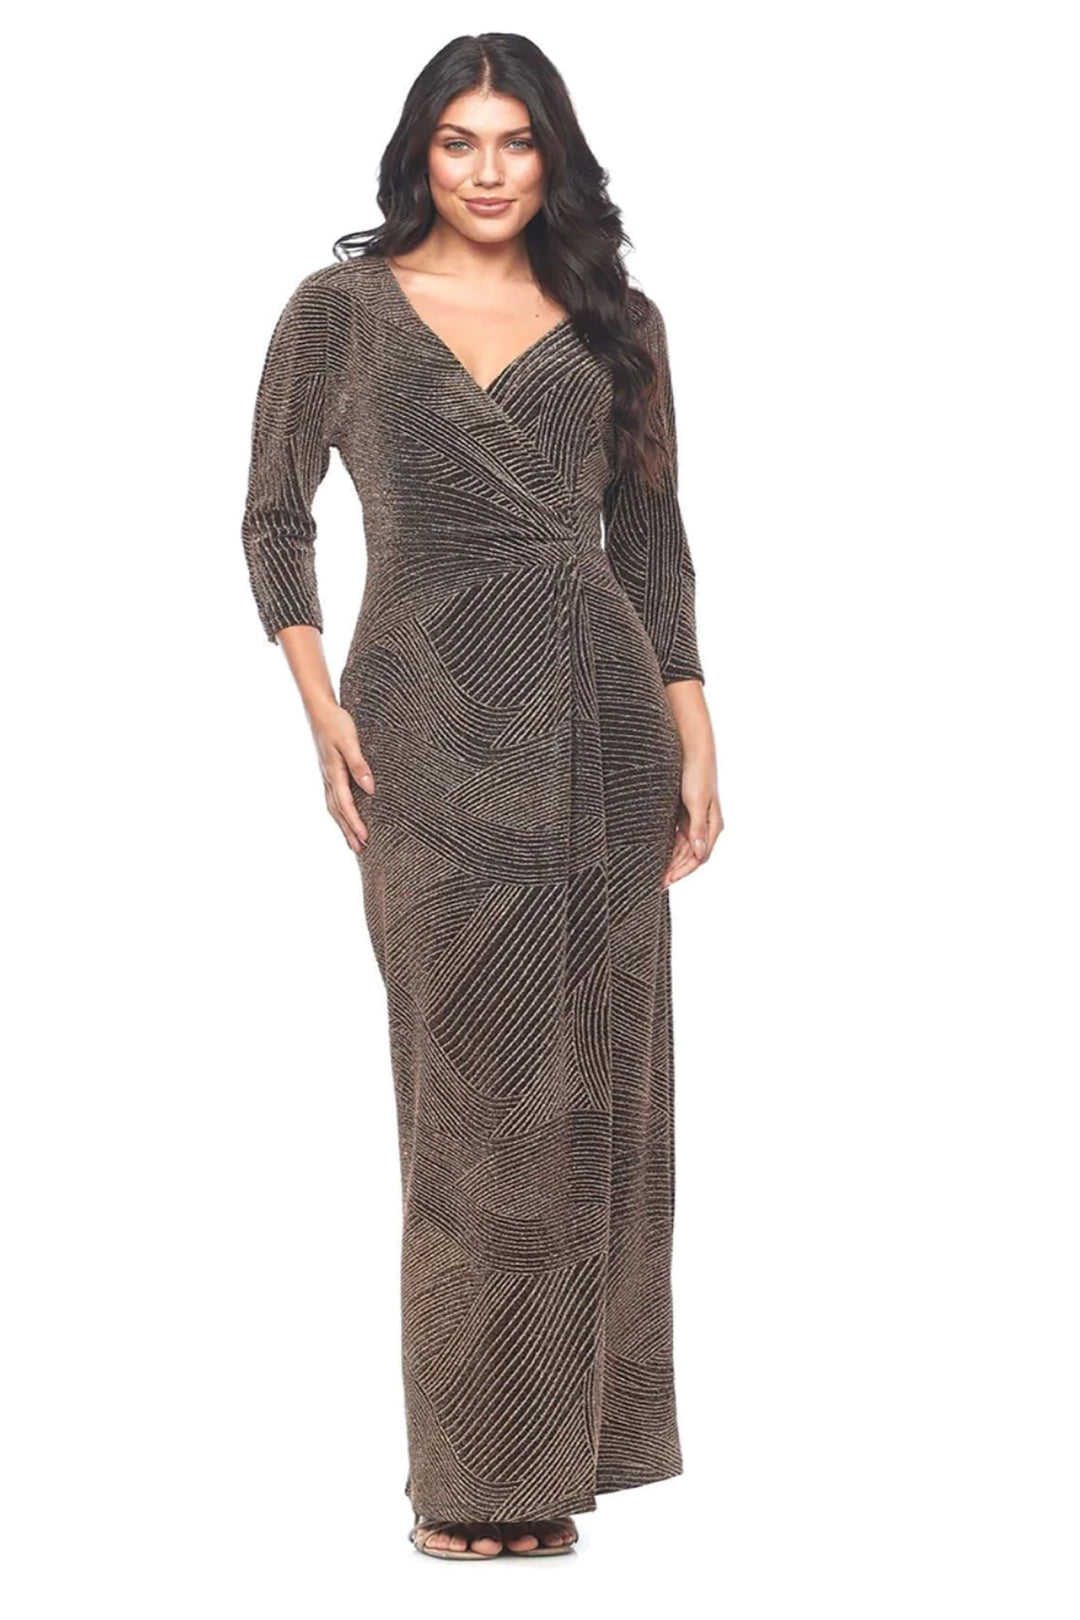 Woman wearing the Zaliea bronze dress, sold and shipped from Pizazz Boutique Nelson Bay women's dresses online Australia